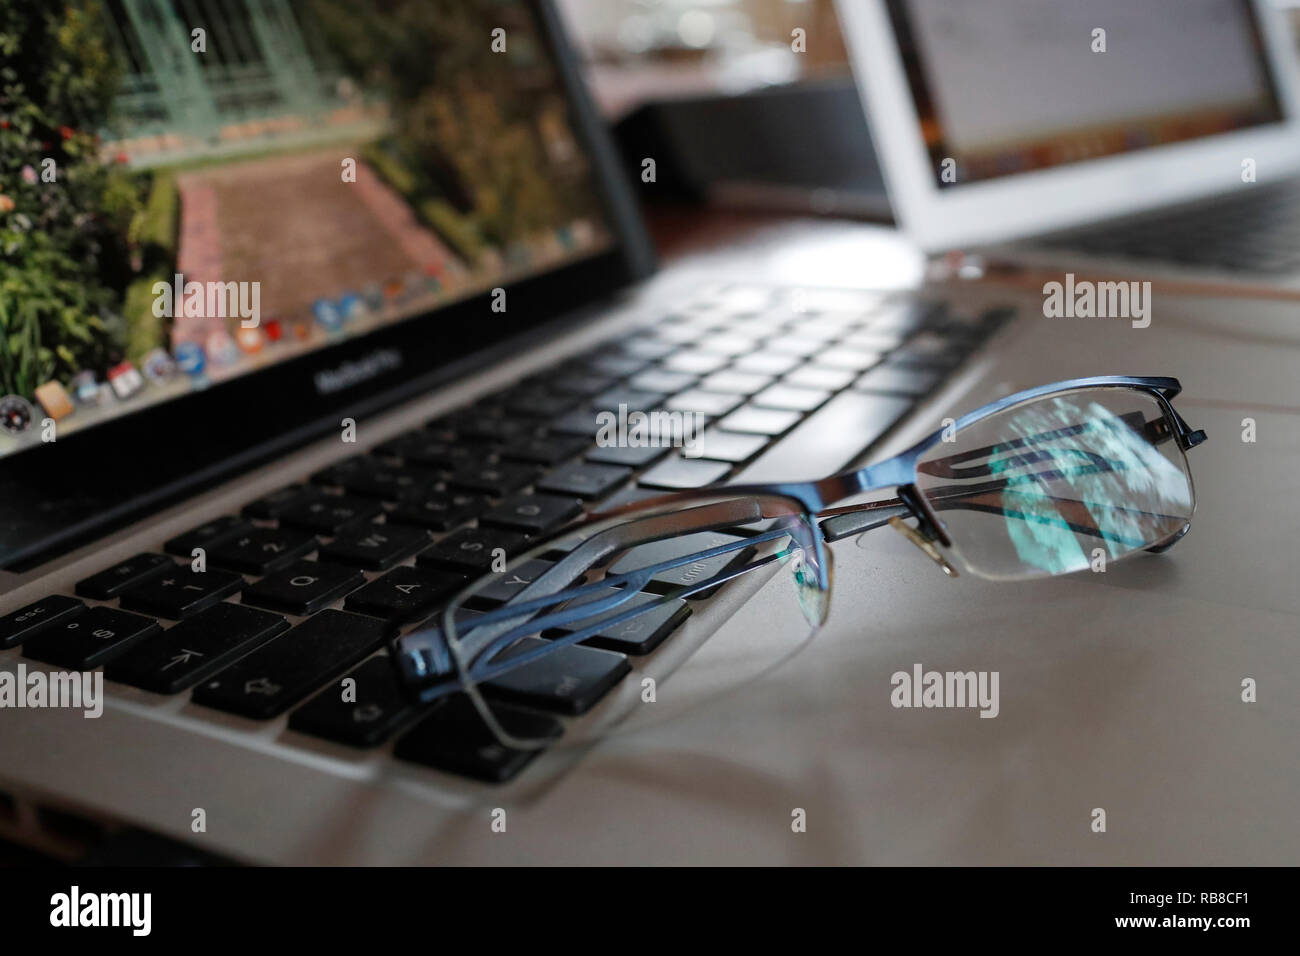 Mac Book Pro. Keyboard and glasses. Geneva. Switzerland. Stock Photo